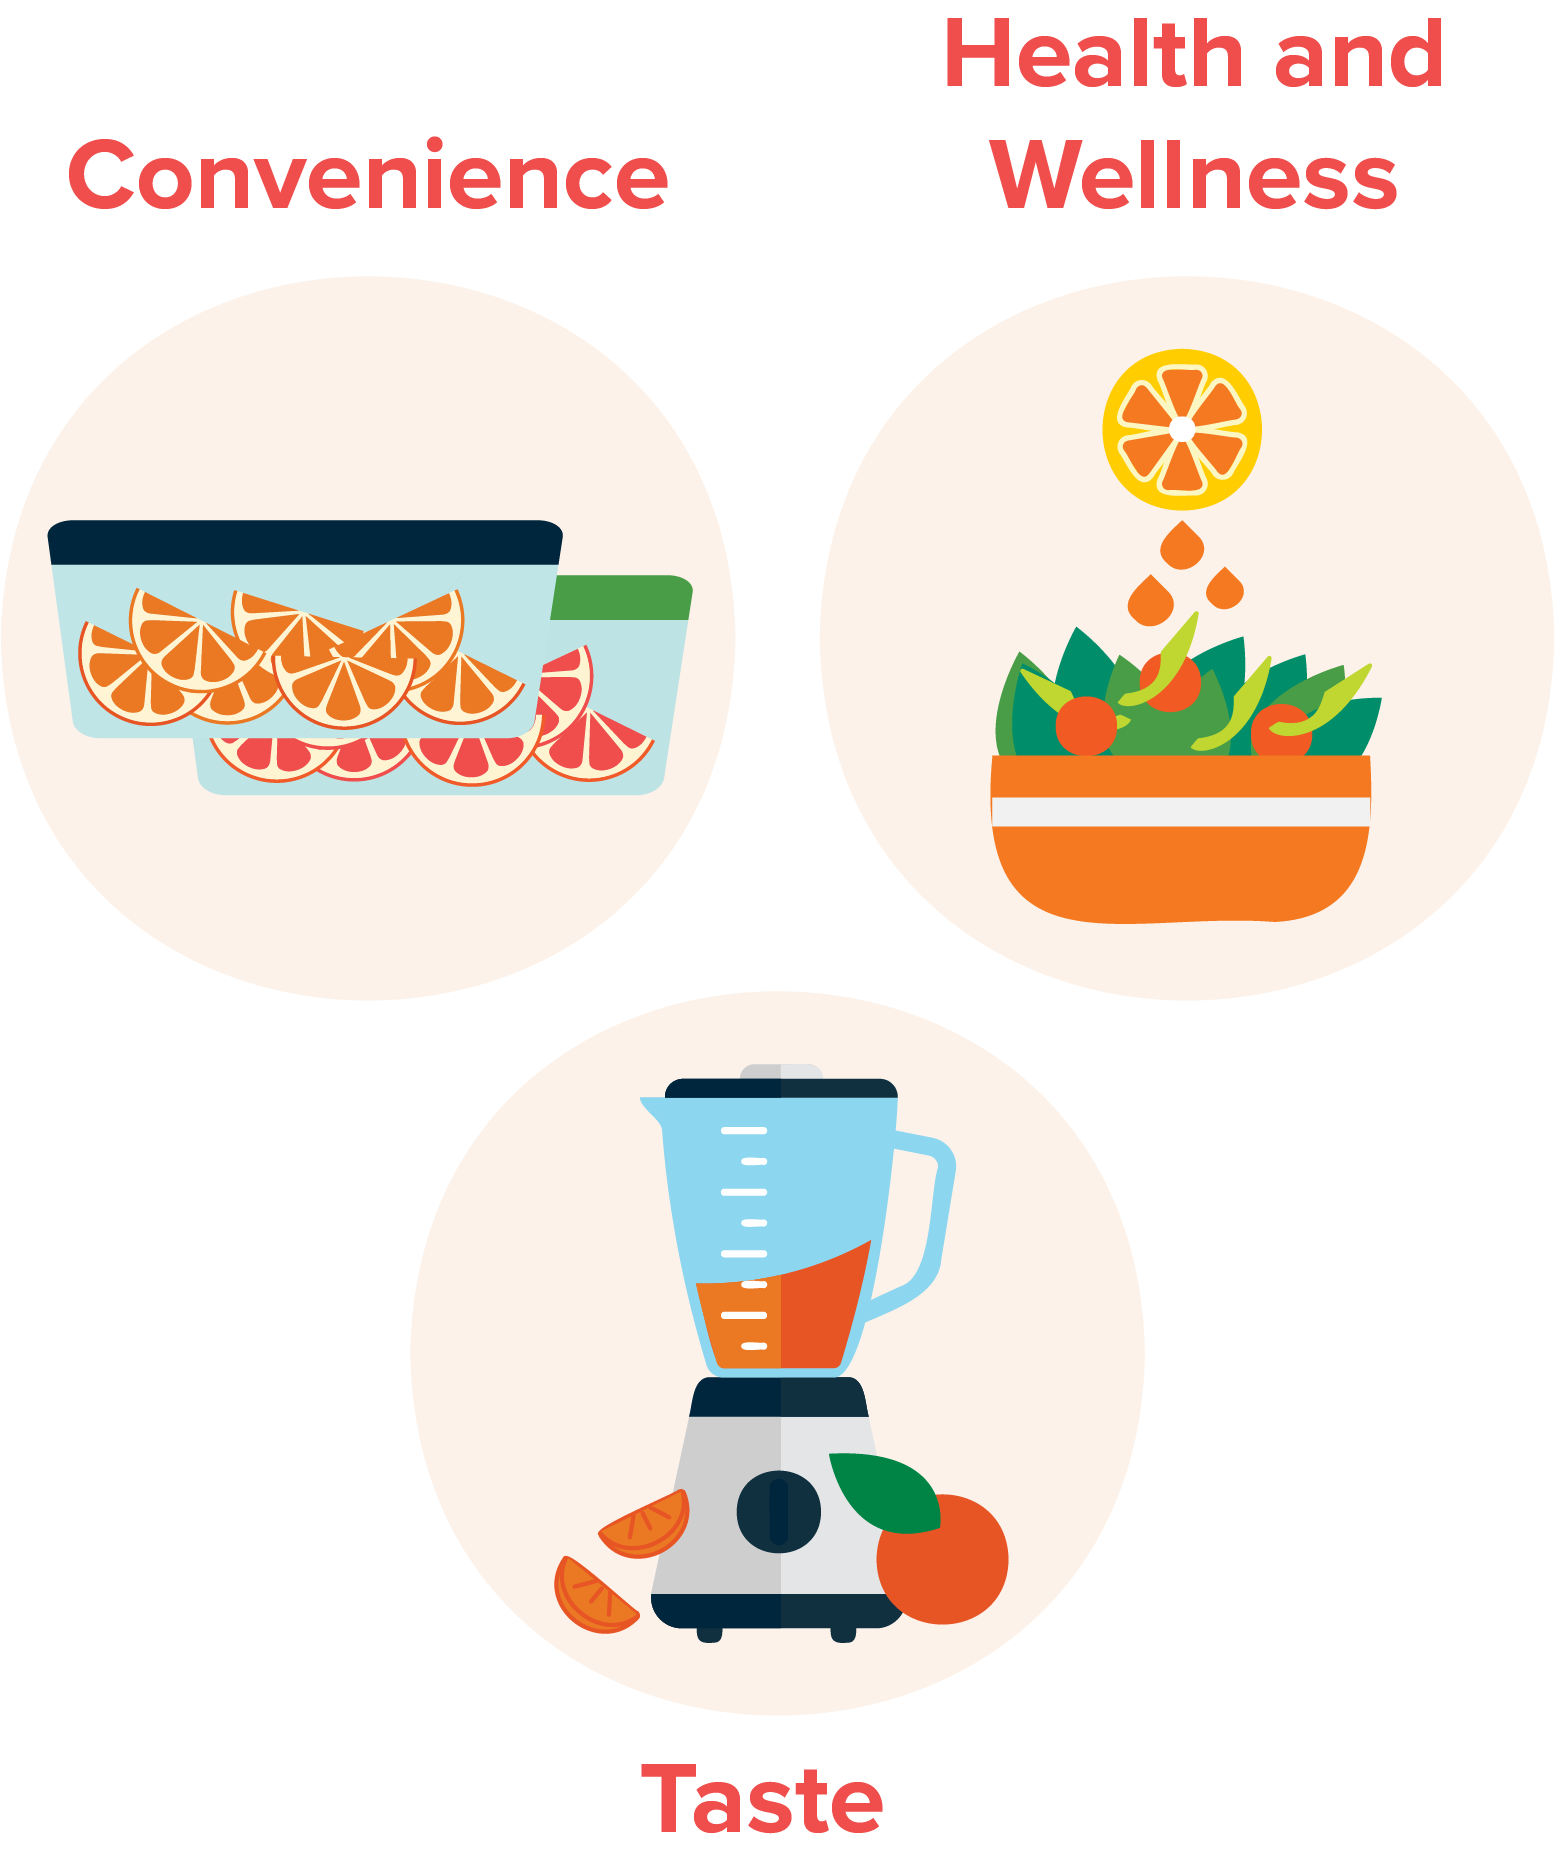 Convenience, Taste, Health and Wellness